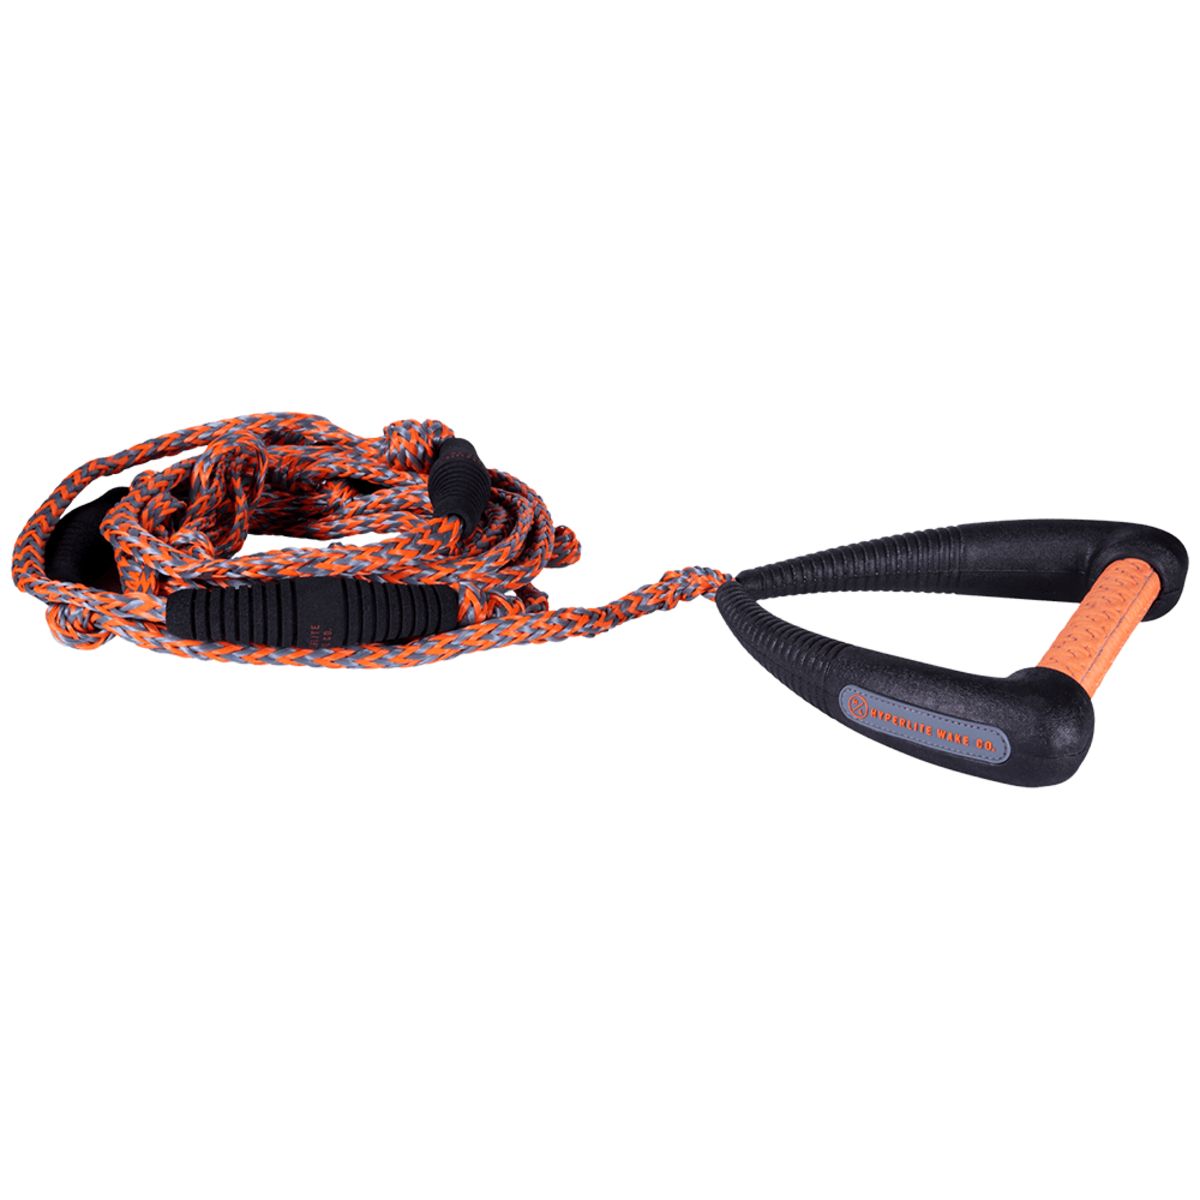 Hyperlite 25' Pro Surf Rope with Handle in Orange